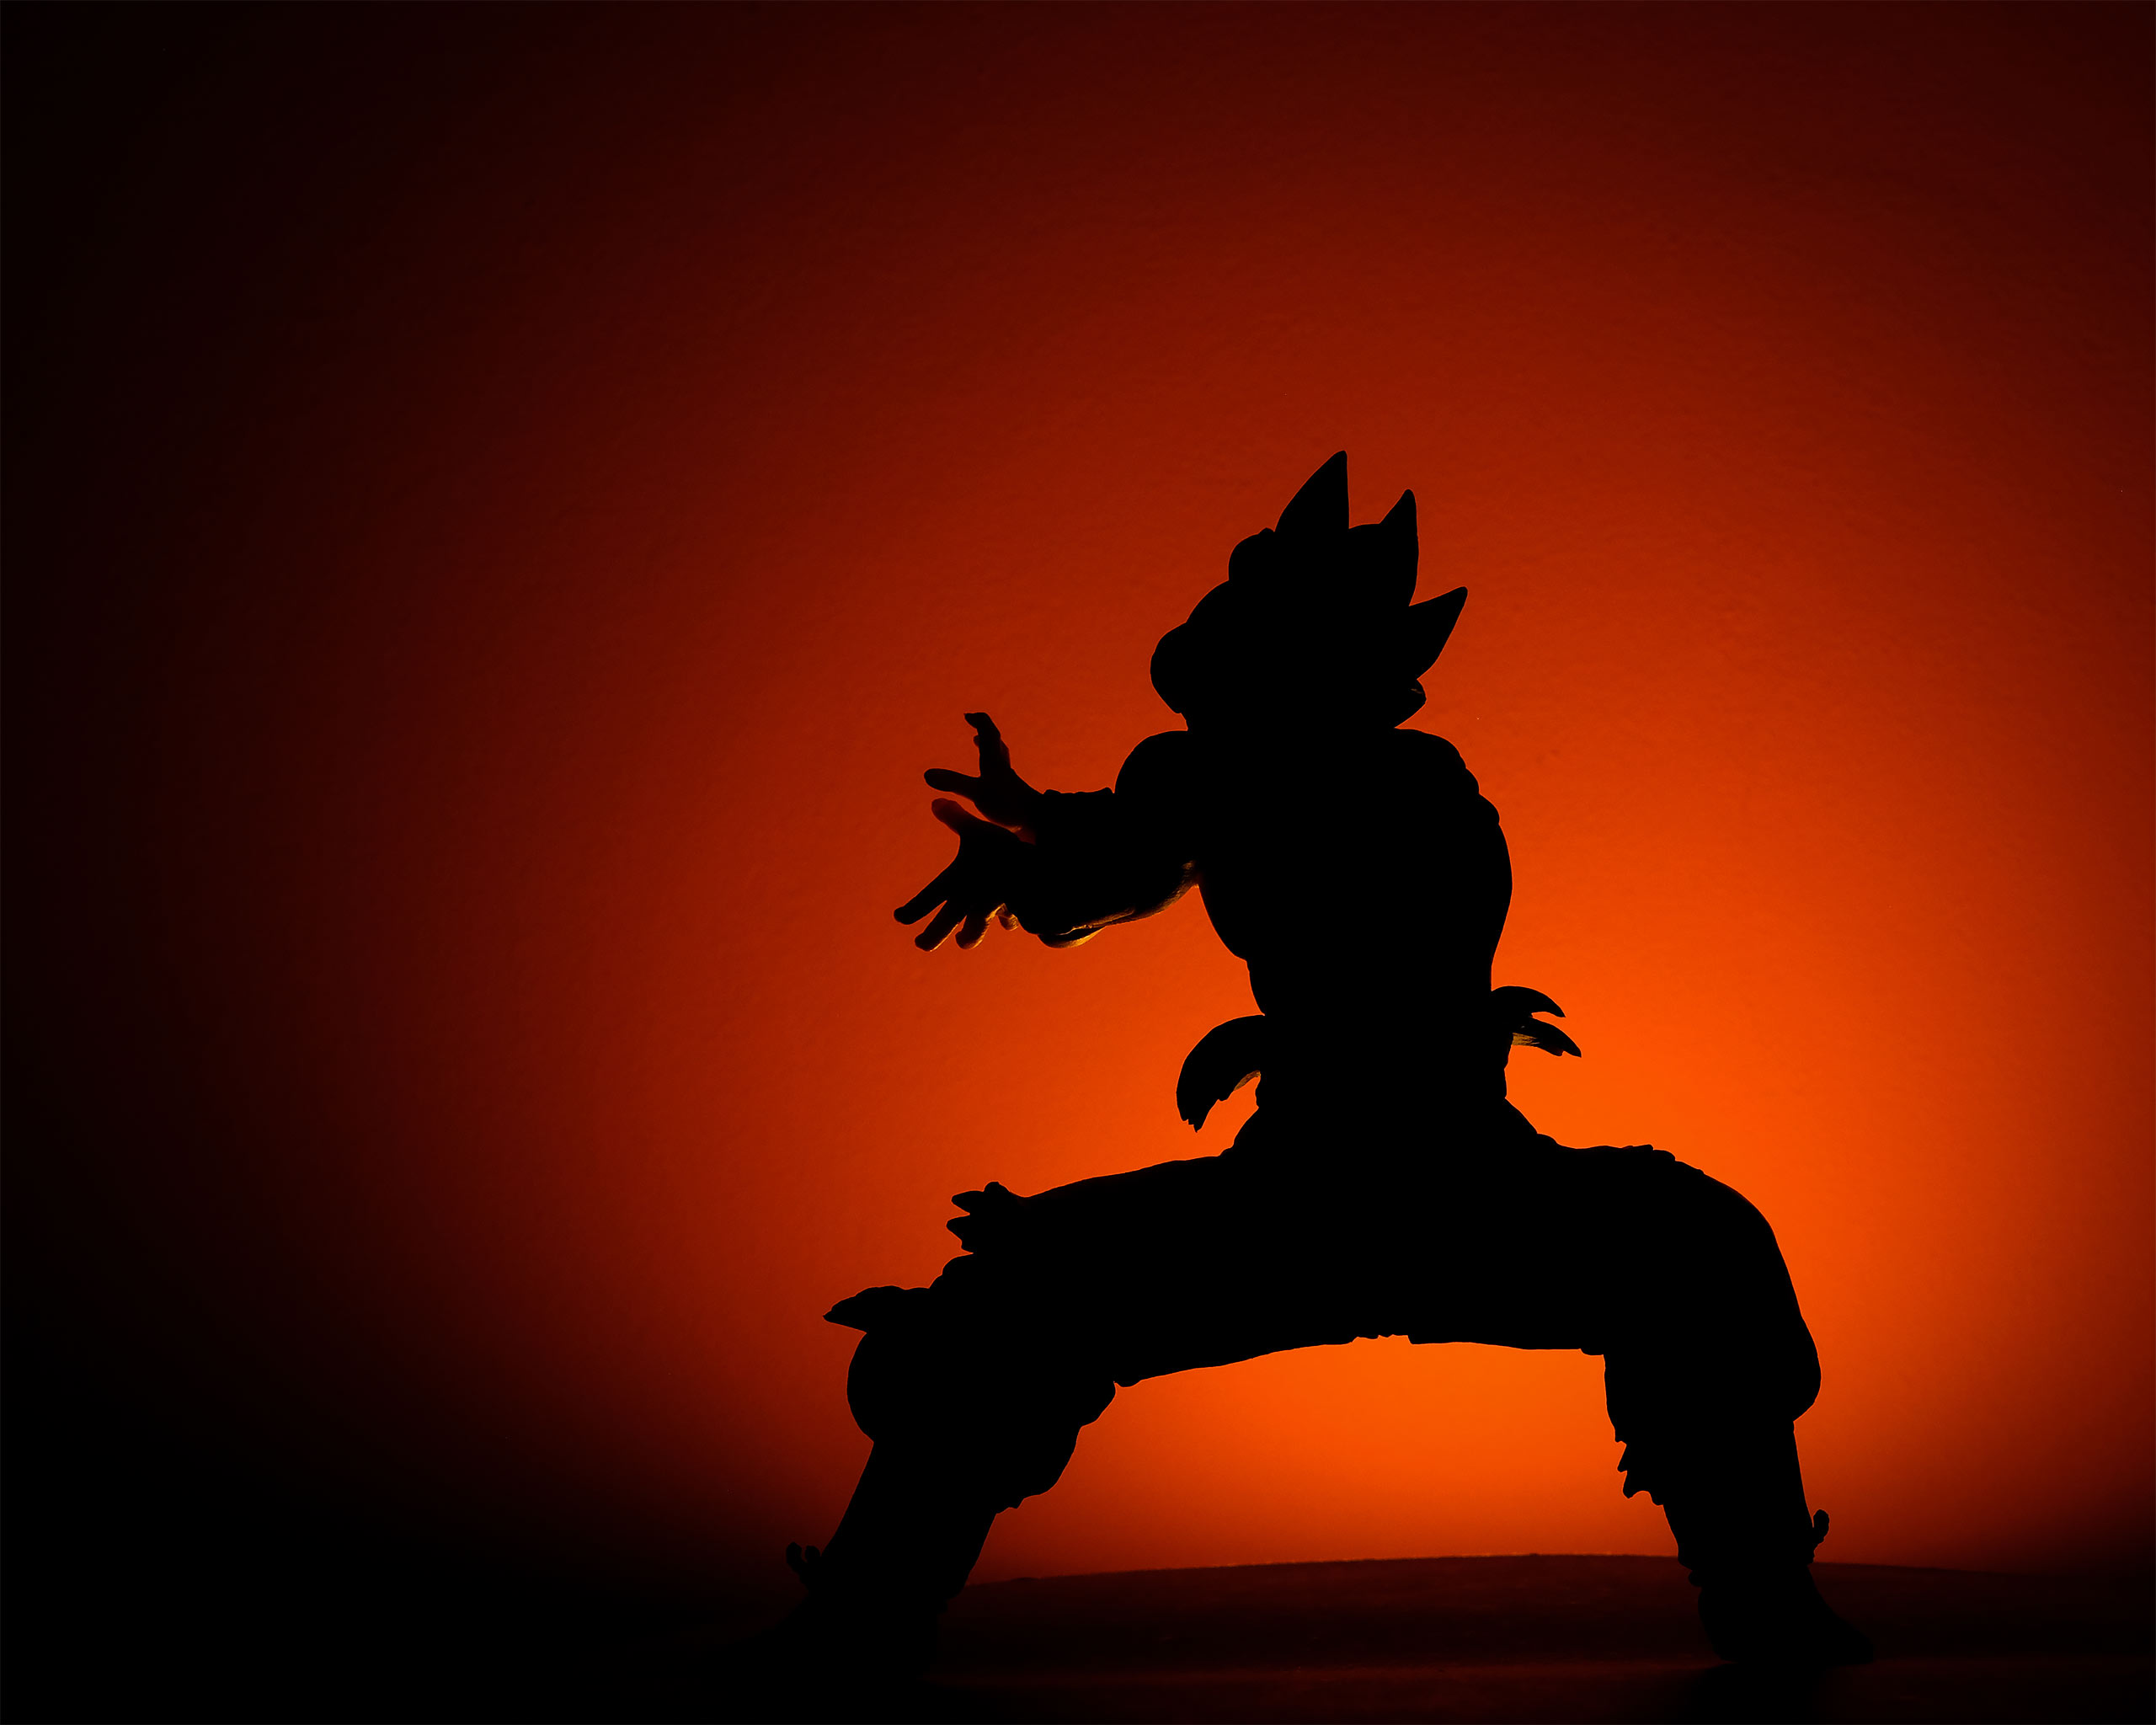 Dragon Ball Super - Goku Ultra Instinct Figure 18cm